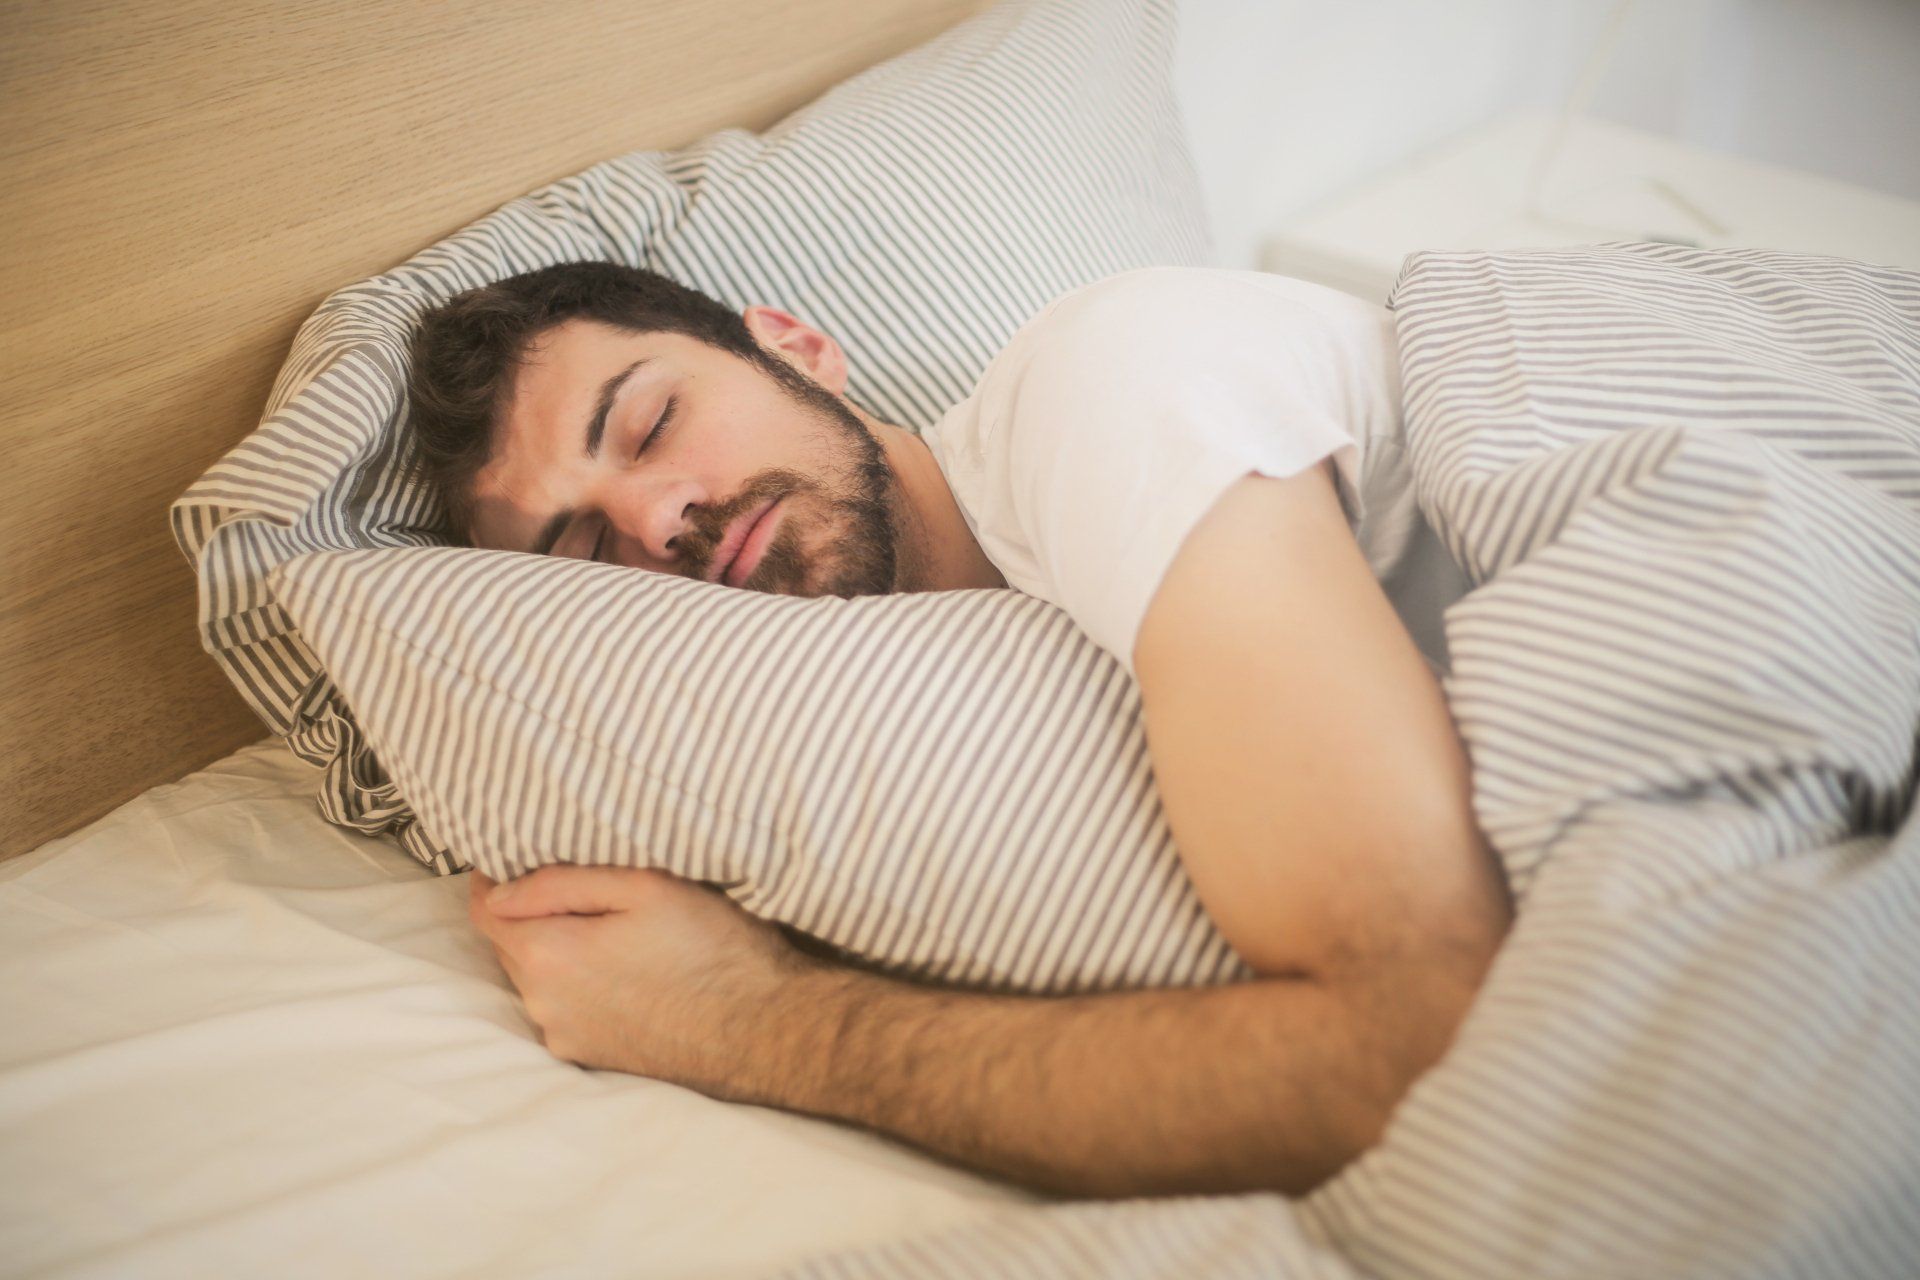 Lifestyle Changes for Managing Sleep Apnea: Tips for Better Sleep